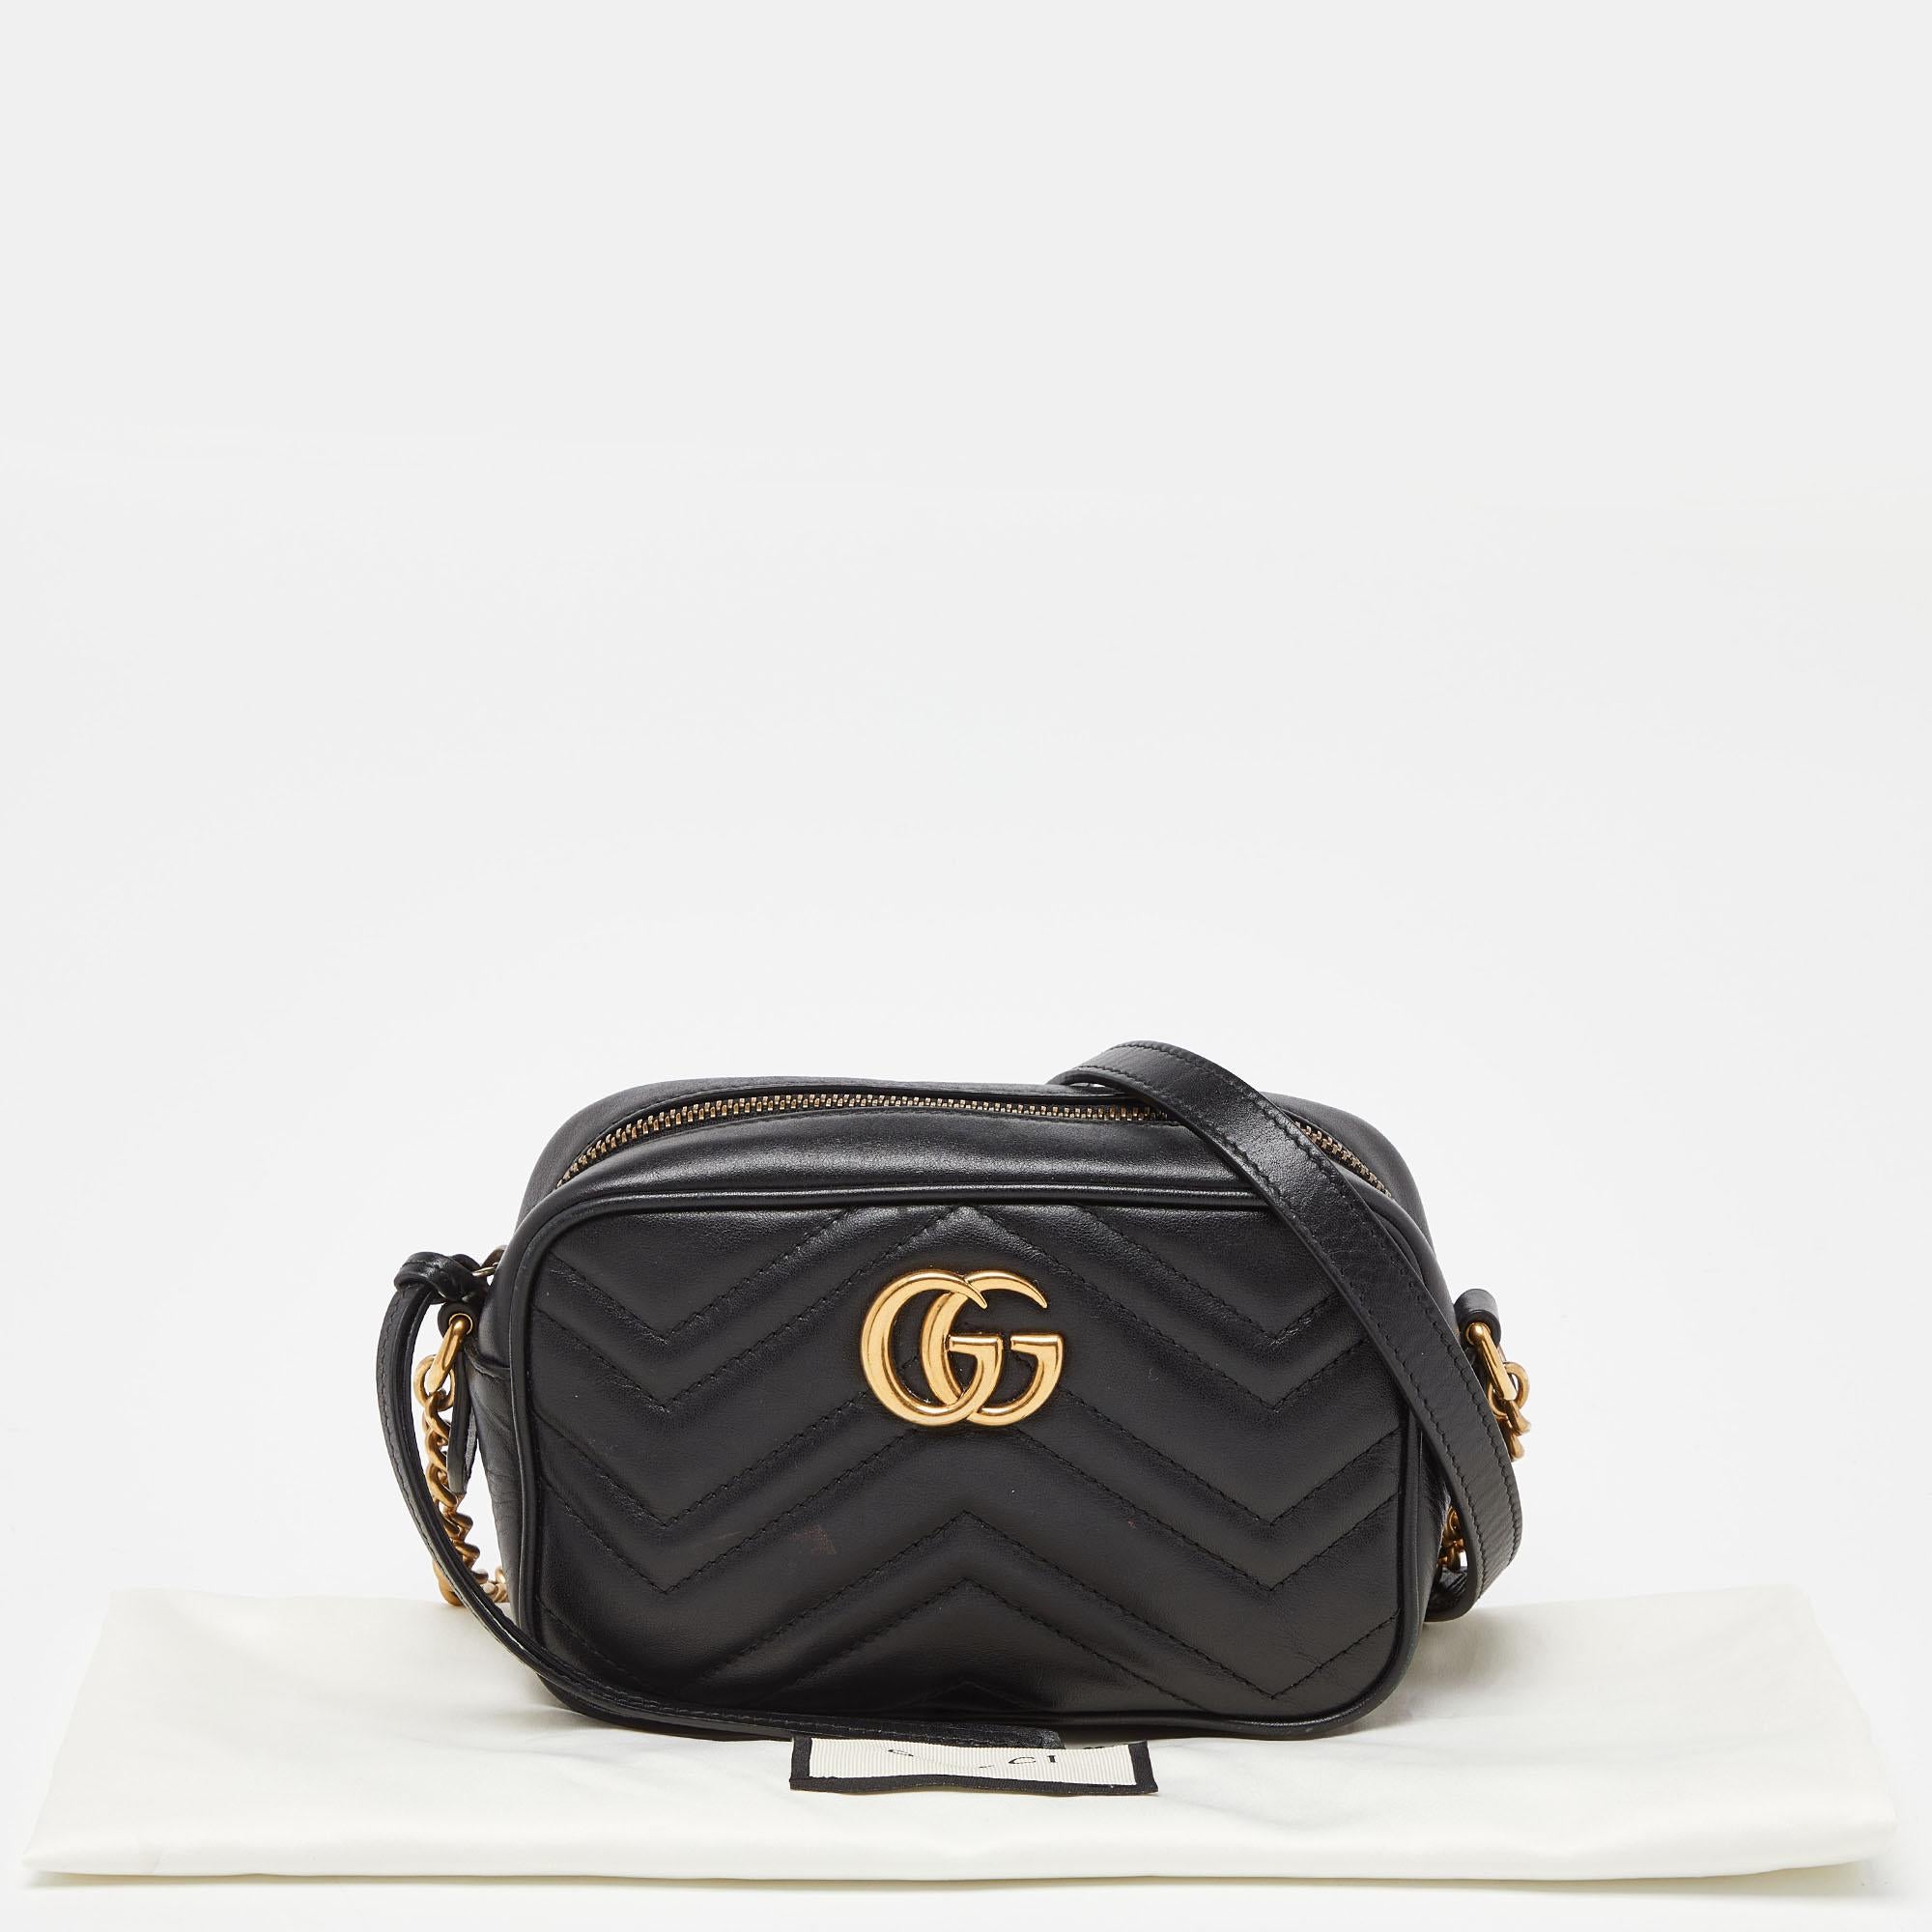 Gucci Black Matelassé Leather Small GG Marmont Camera Bag For Sale 3